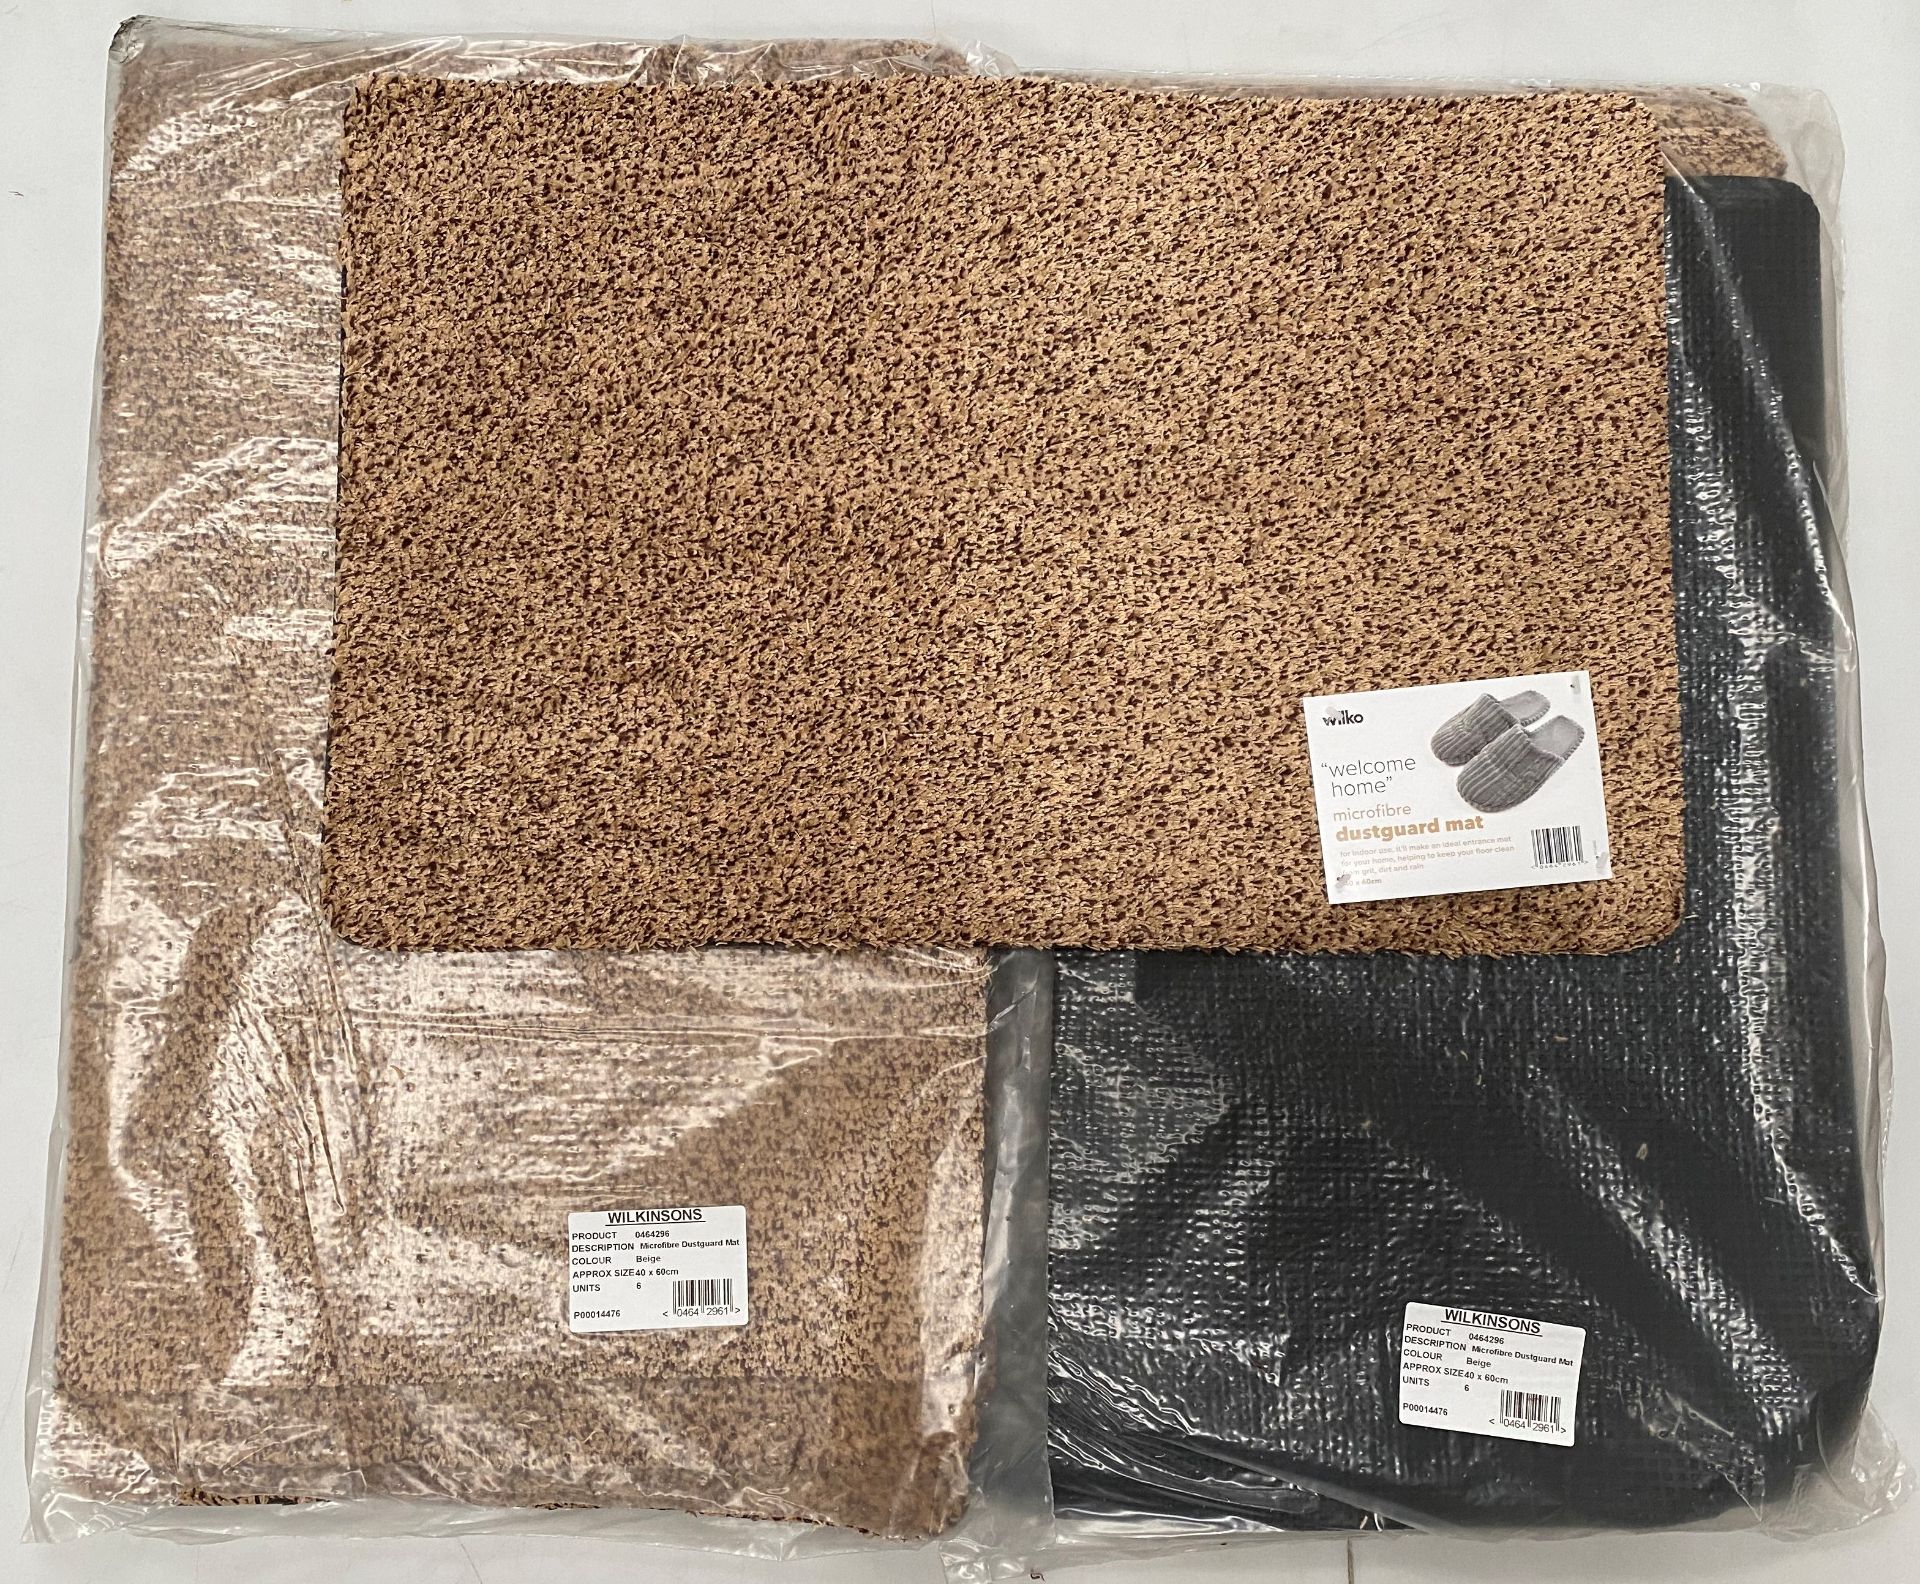 24 x Wilko 'Welcome Home' microfibre dustguard mats (4 packs) - 40cm x 60cm approx.